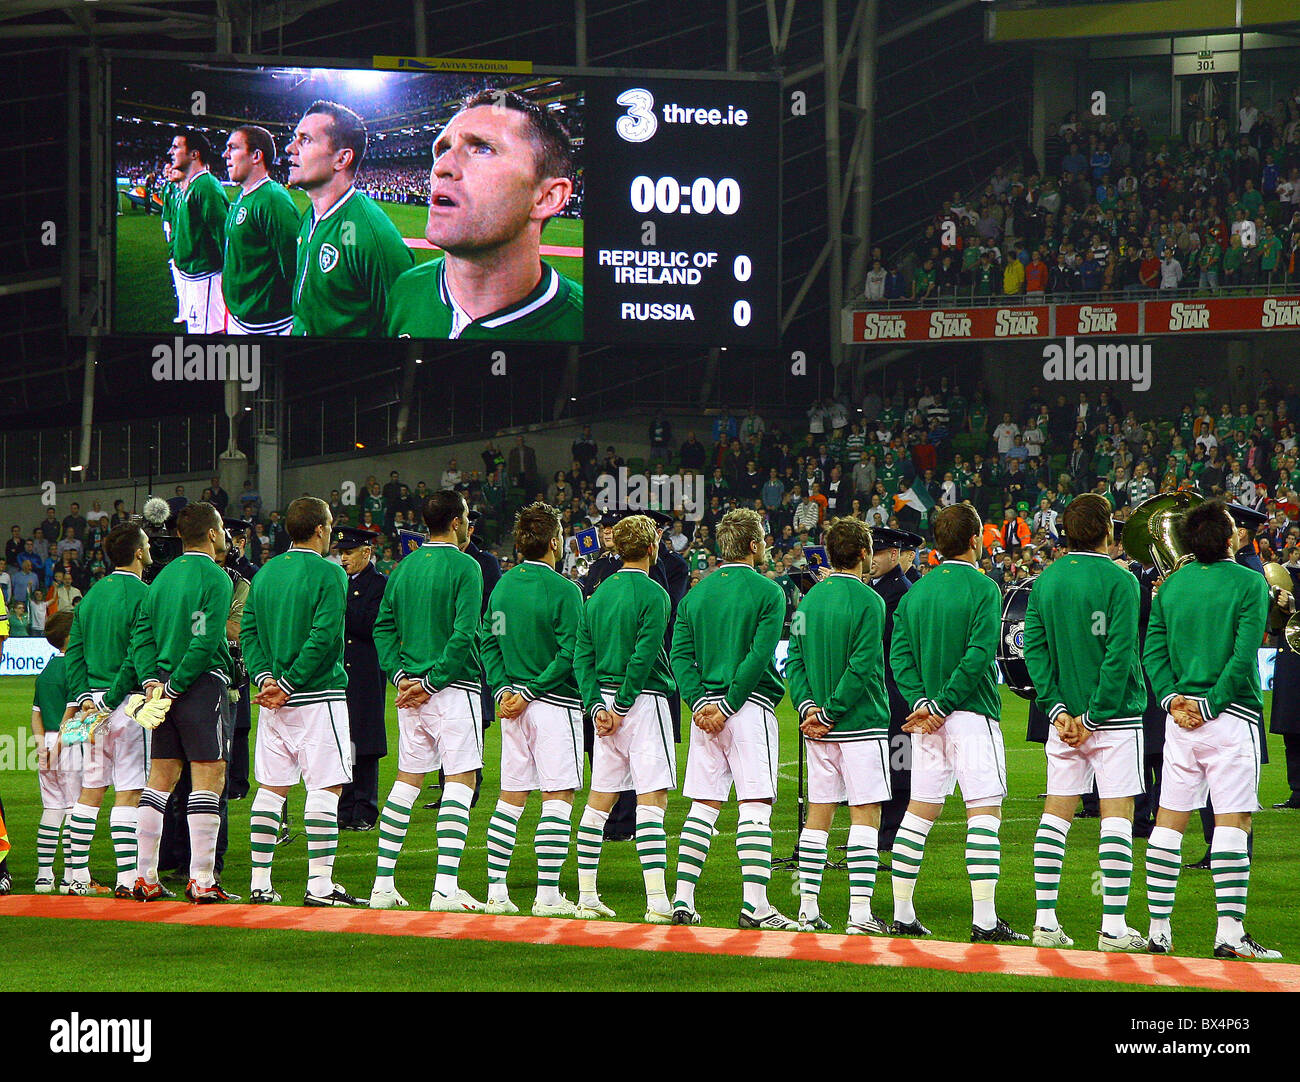 Rep of Ireland Soccer team Stock Photo